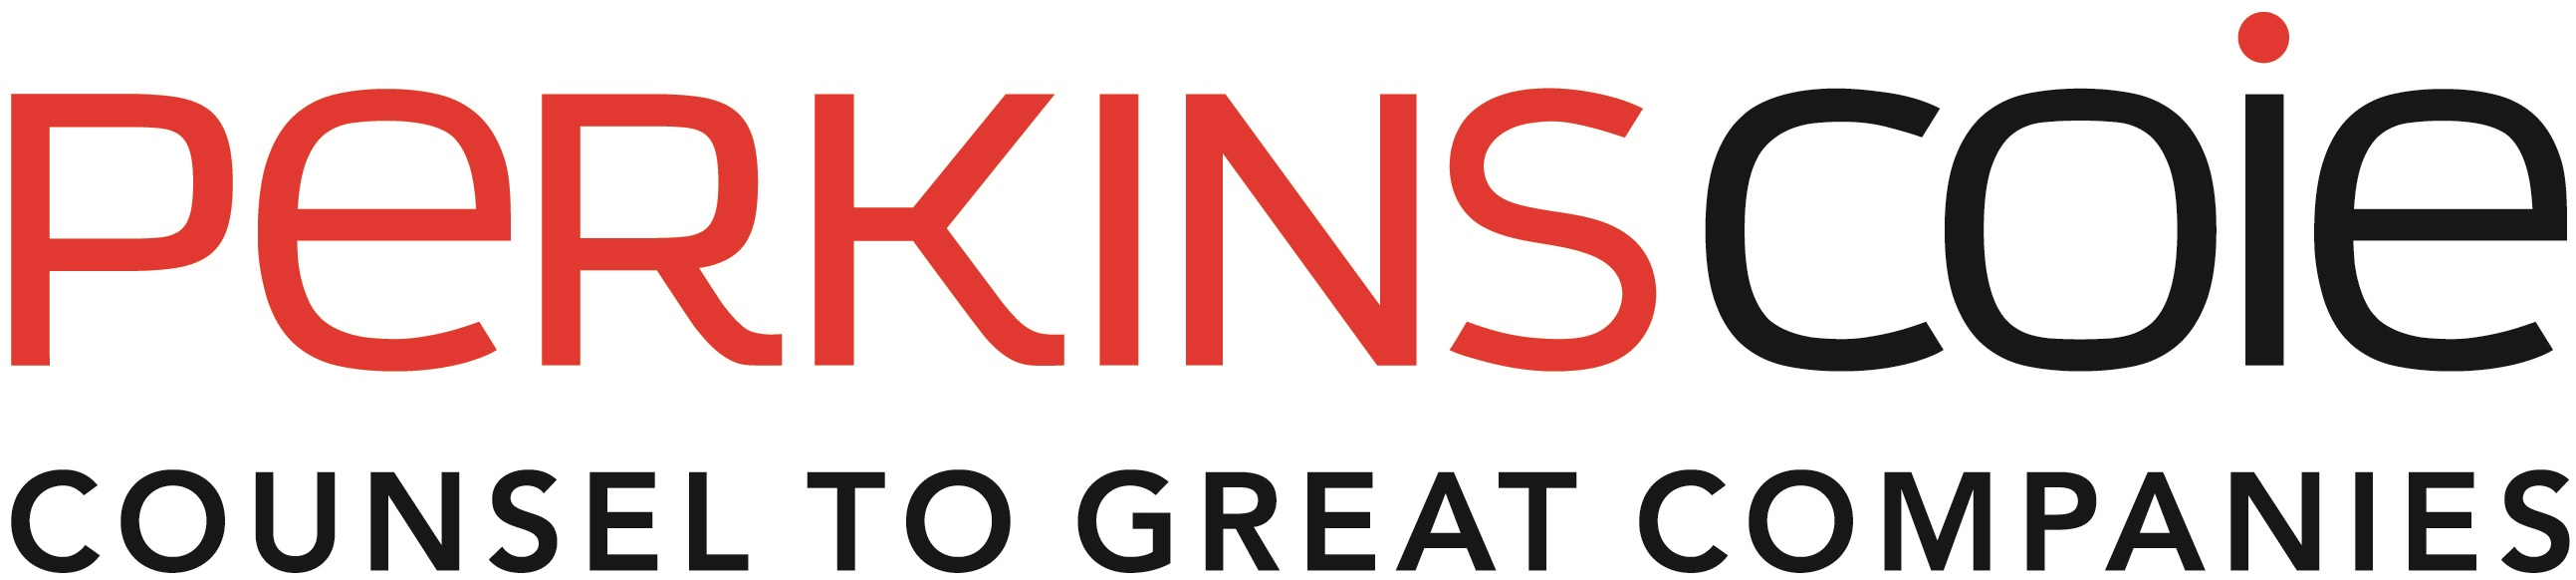 Perkins Coie Company Logo